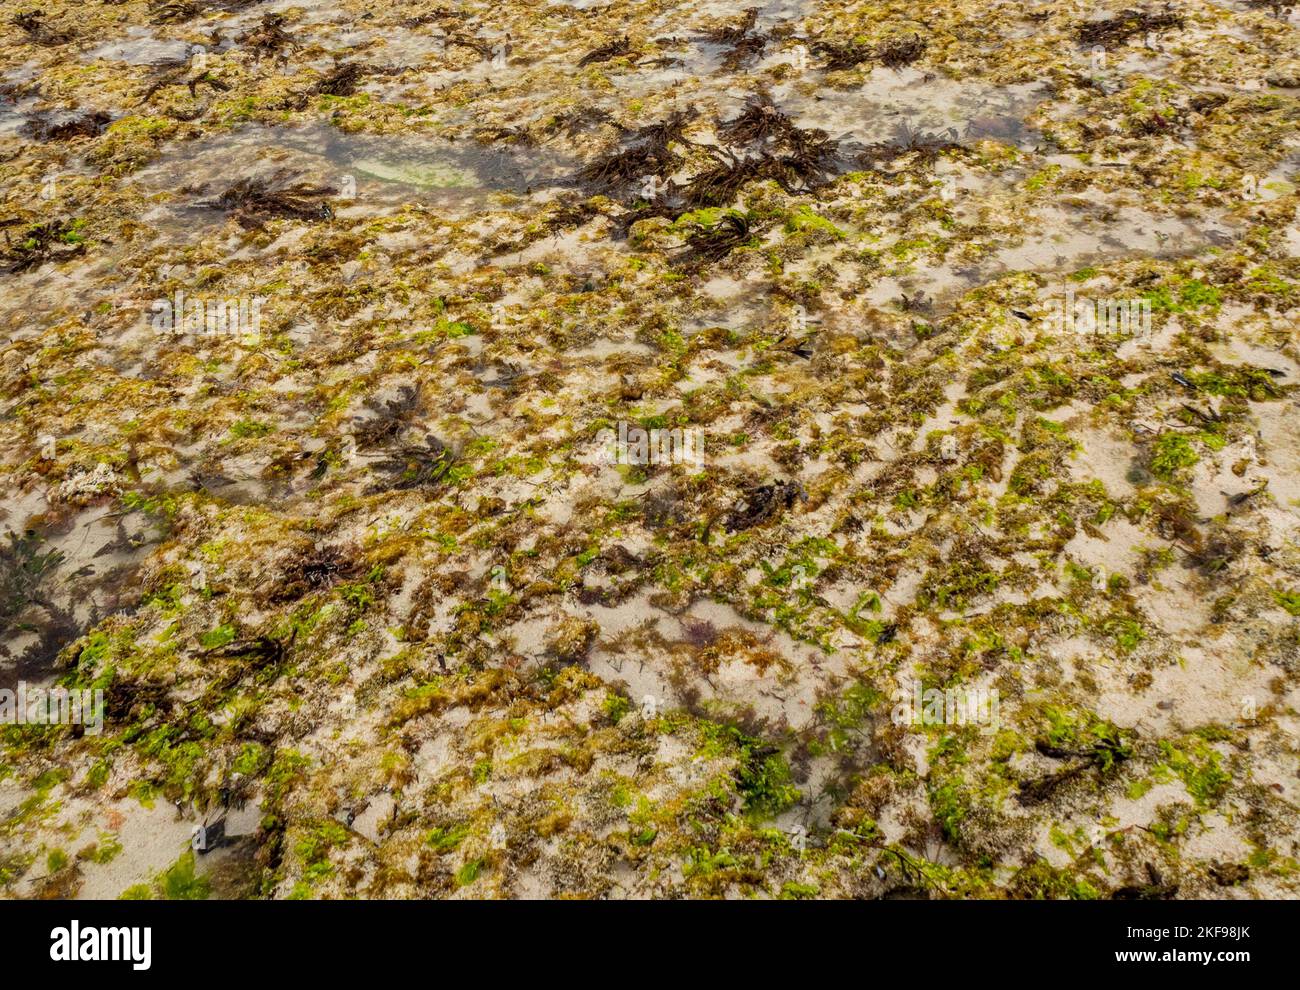 Low tide exposing reefs at Cape Mentelle in Leeuwin-Naturaliste National Park Margaret River Region Western Australia Stock Photo